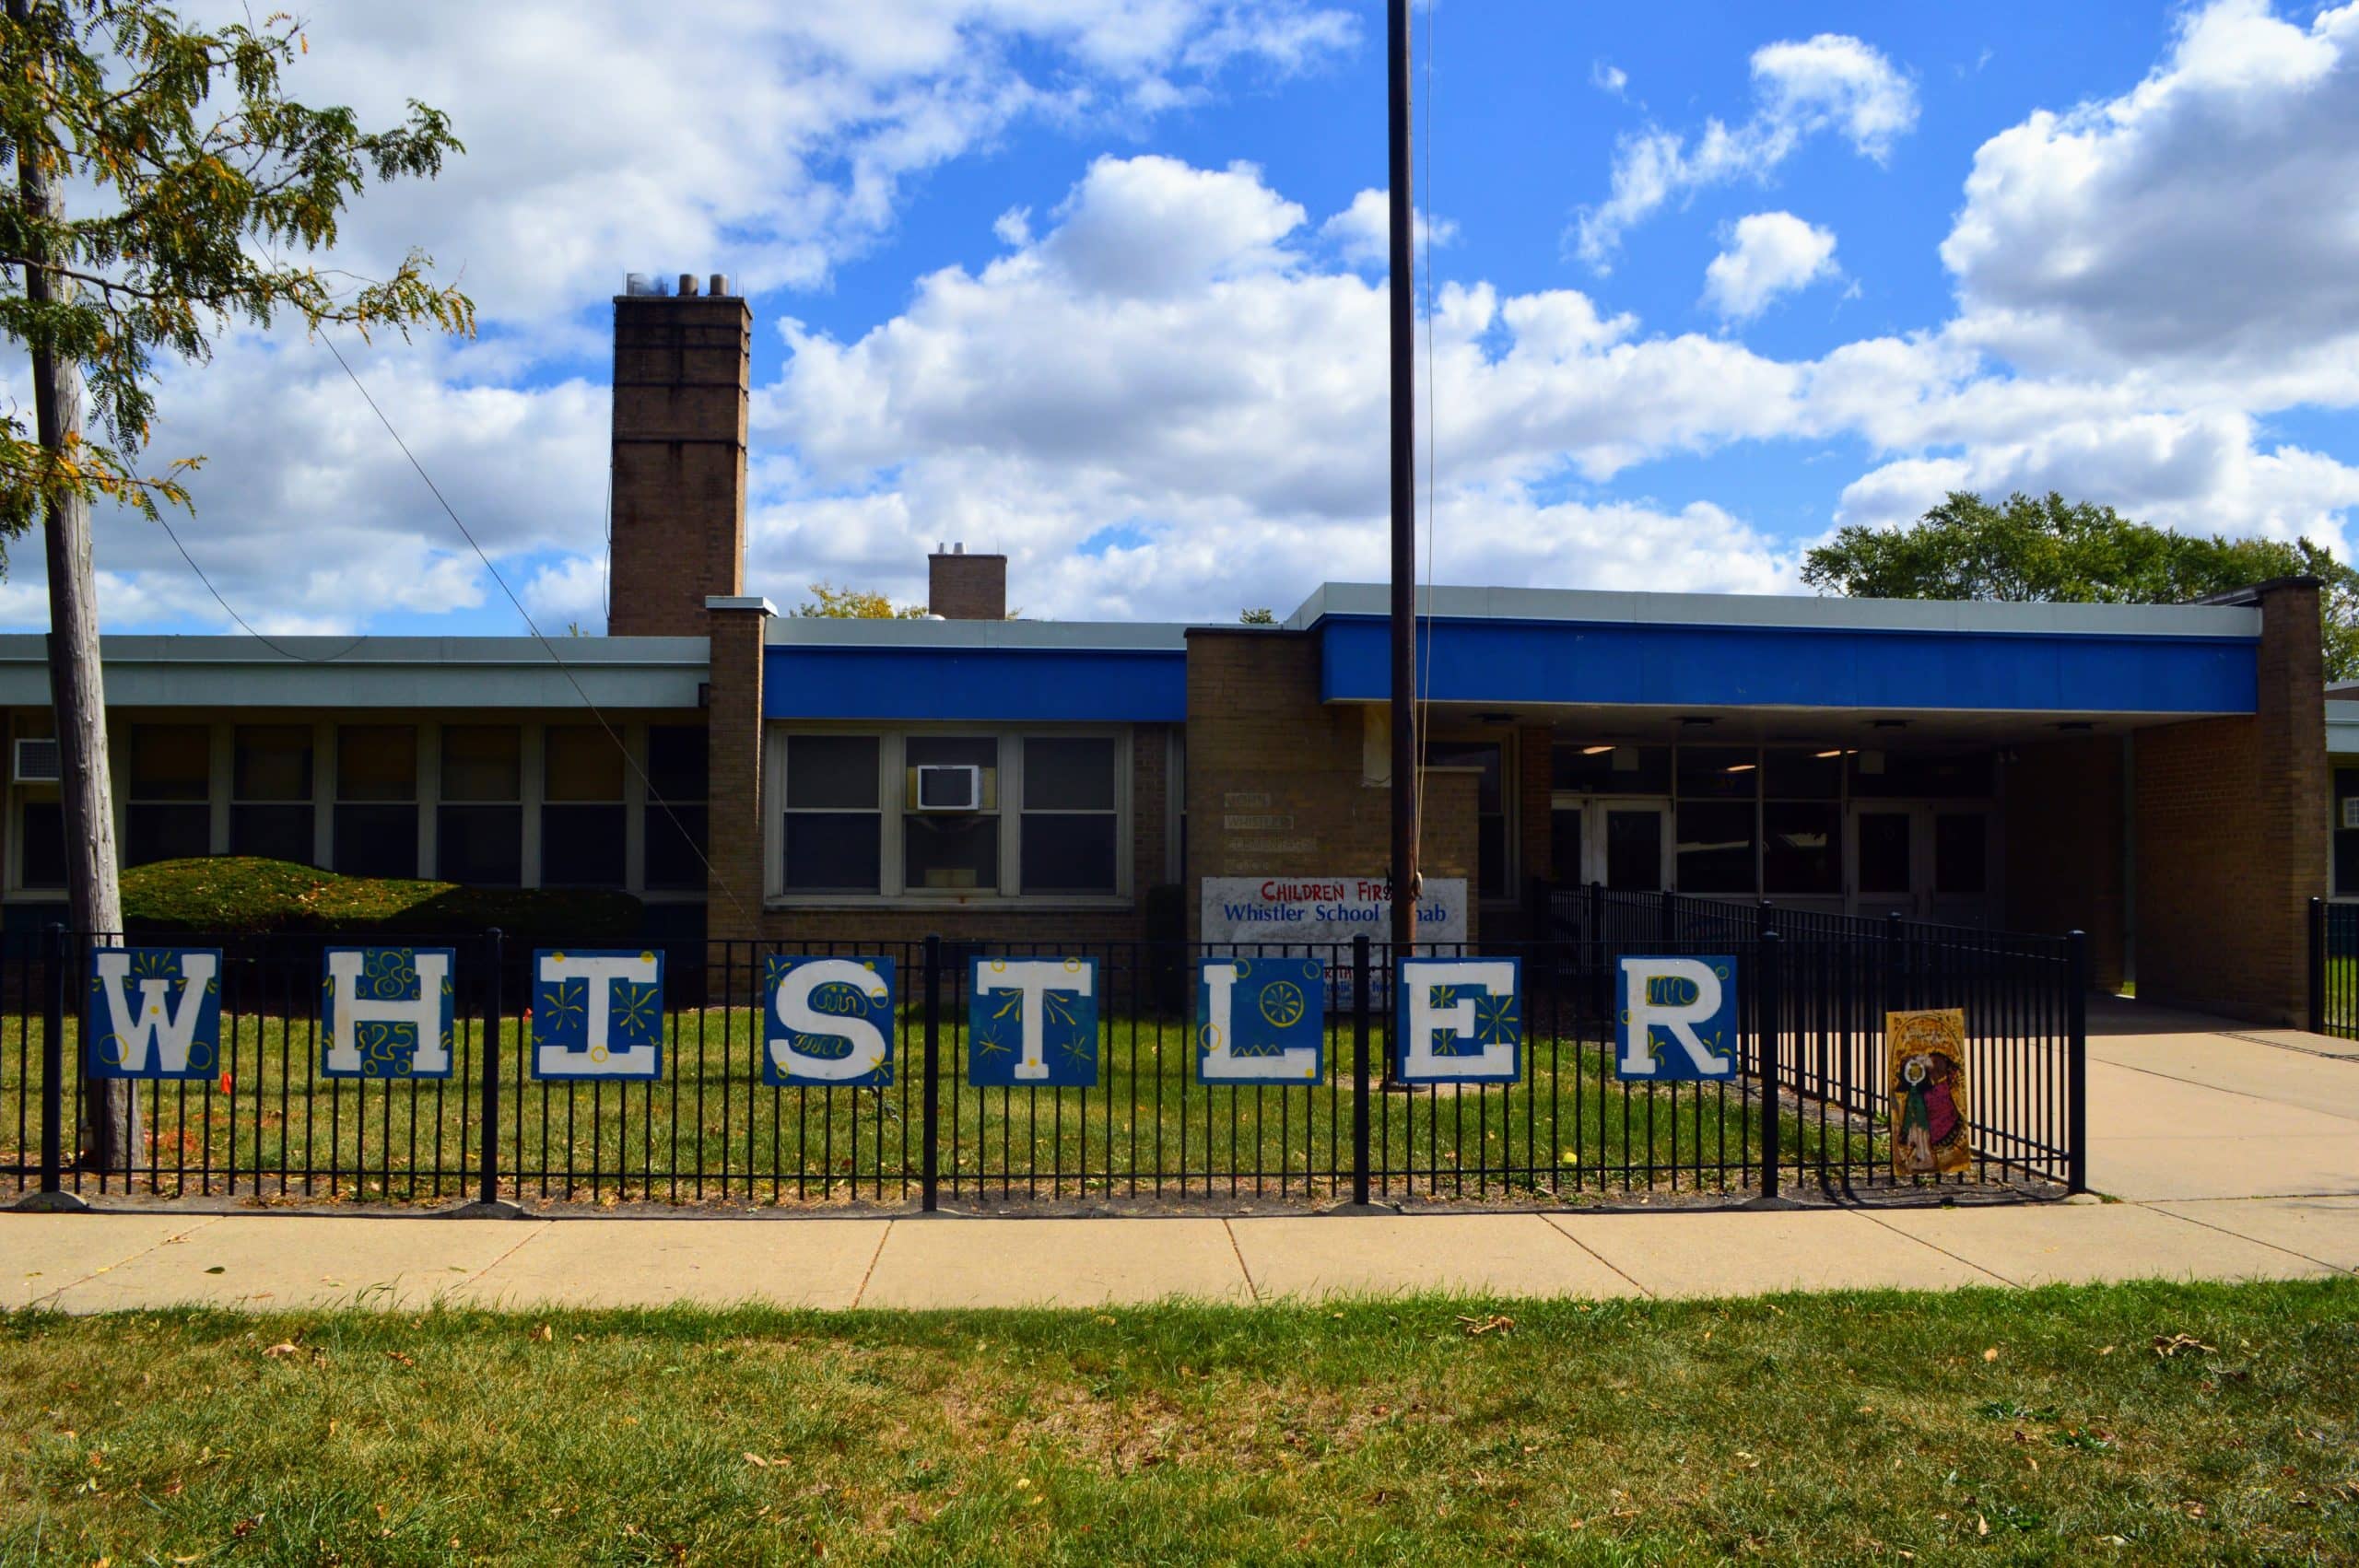 Whistler school name sign